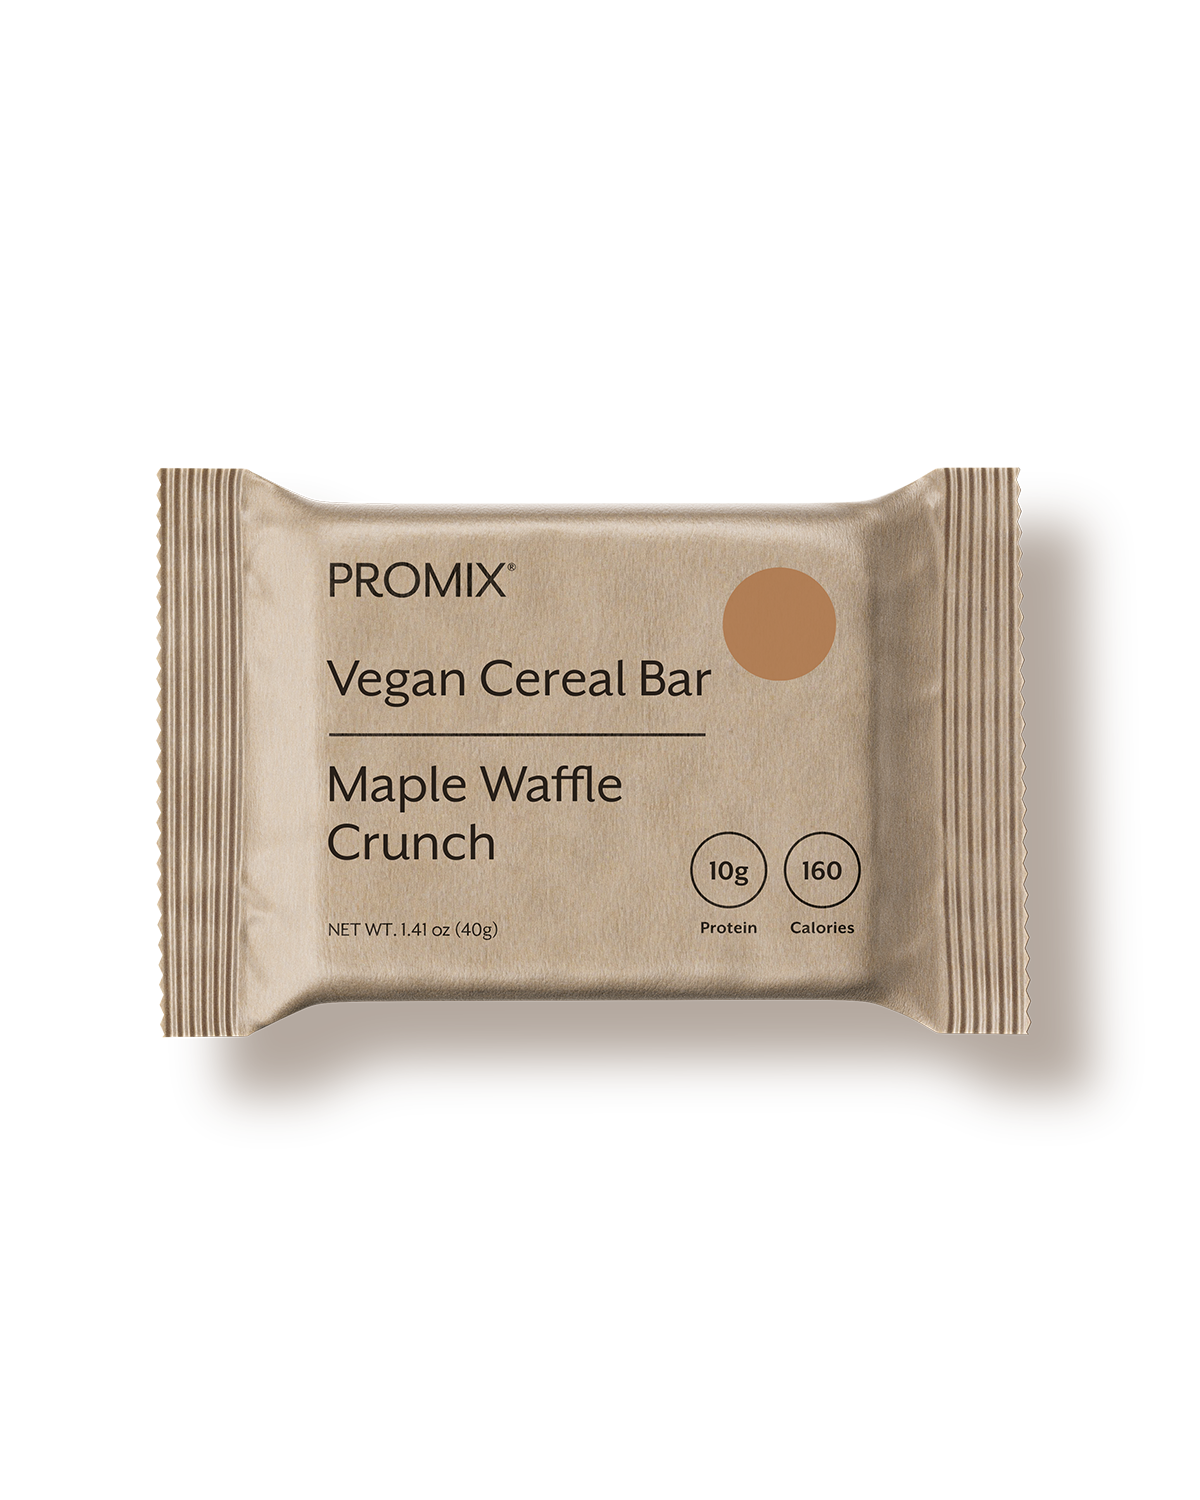 Maple Waffle Crunch Vegan Cereal Bars, Size: 12 bars